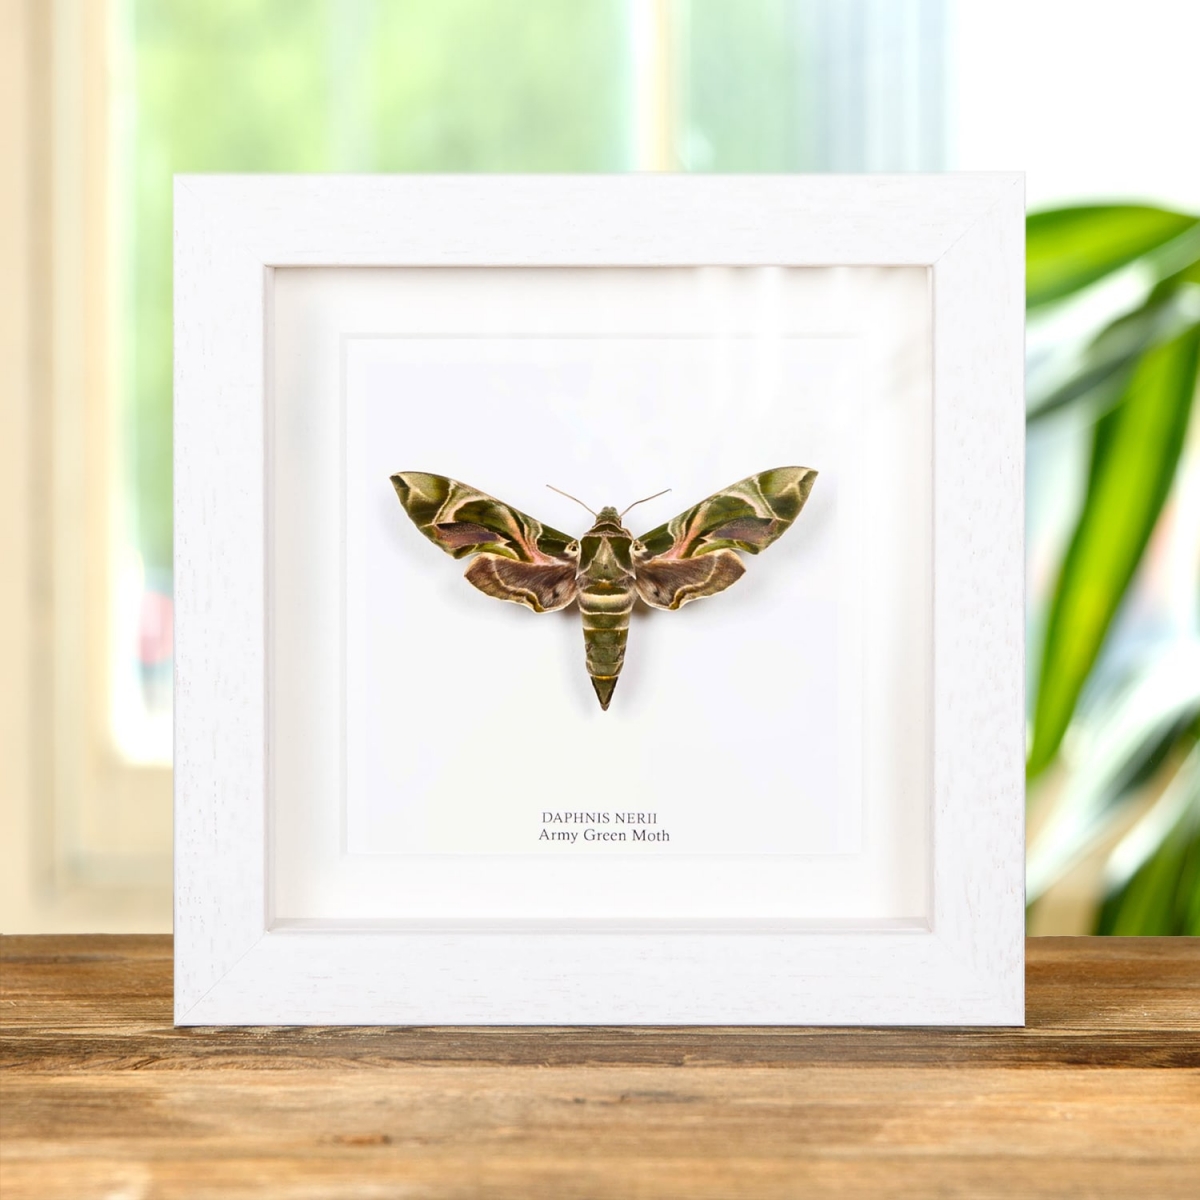 Army Green Moth in Box Frame (Daphnis nerii)